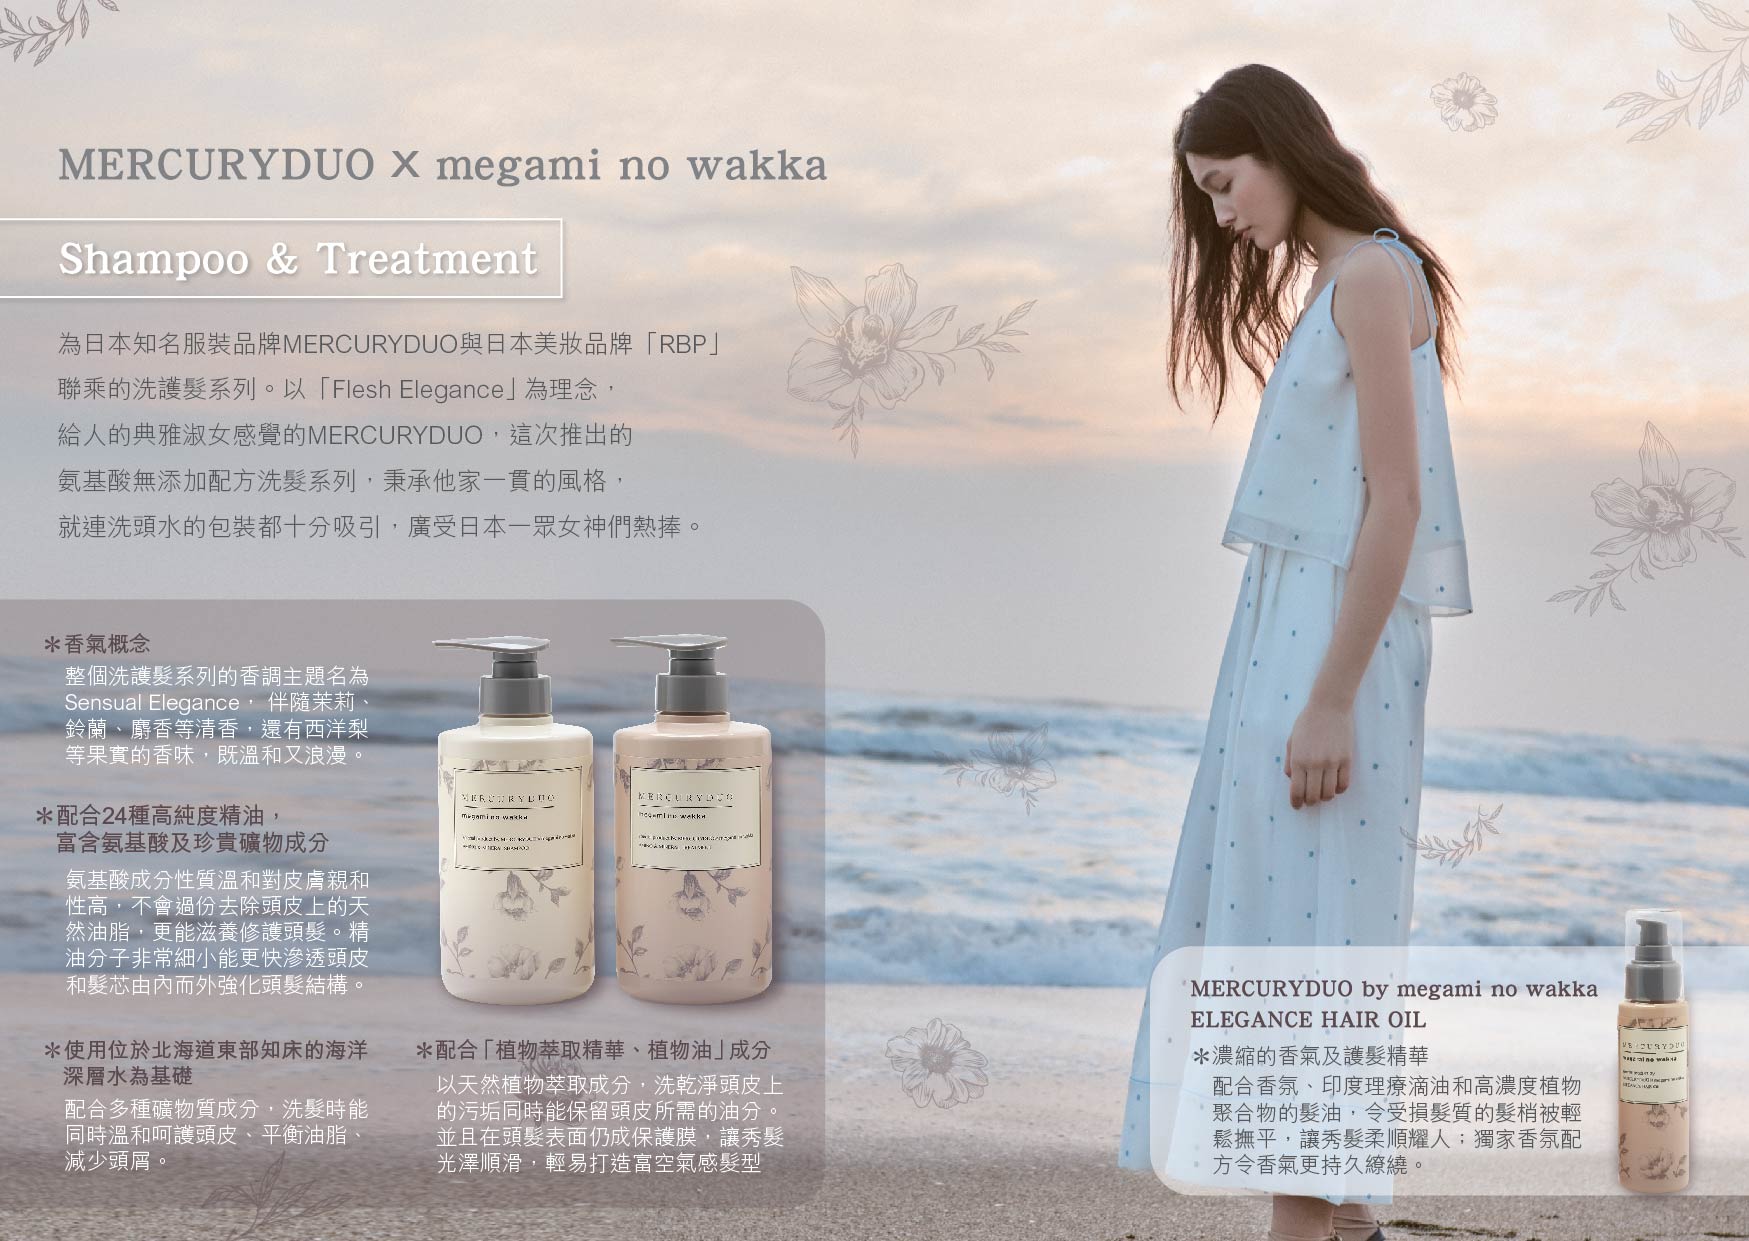 MERCURYDOU x megami no wakka女神光環氨基酸&礦物質洗護髮系列.jpg